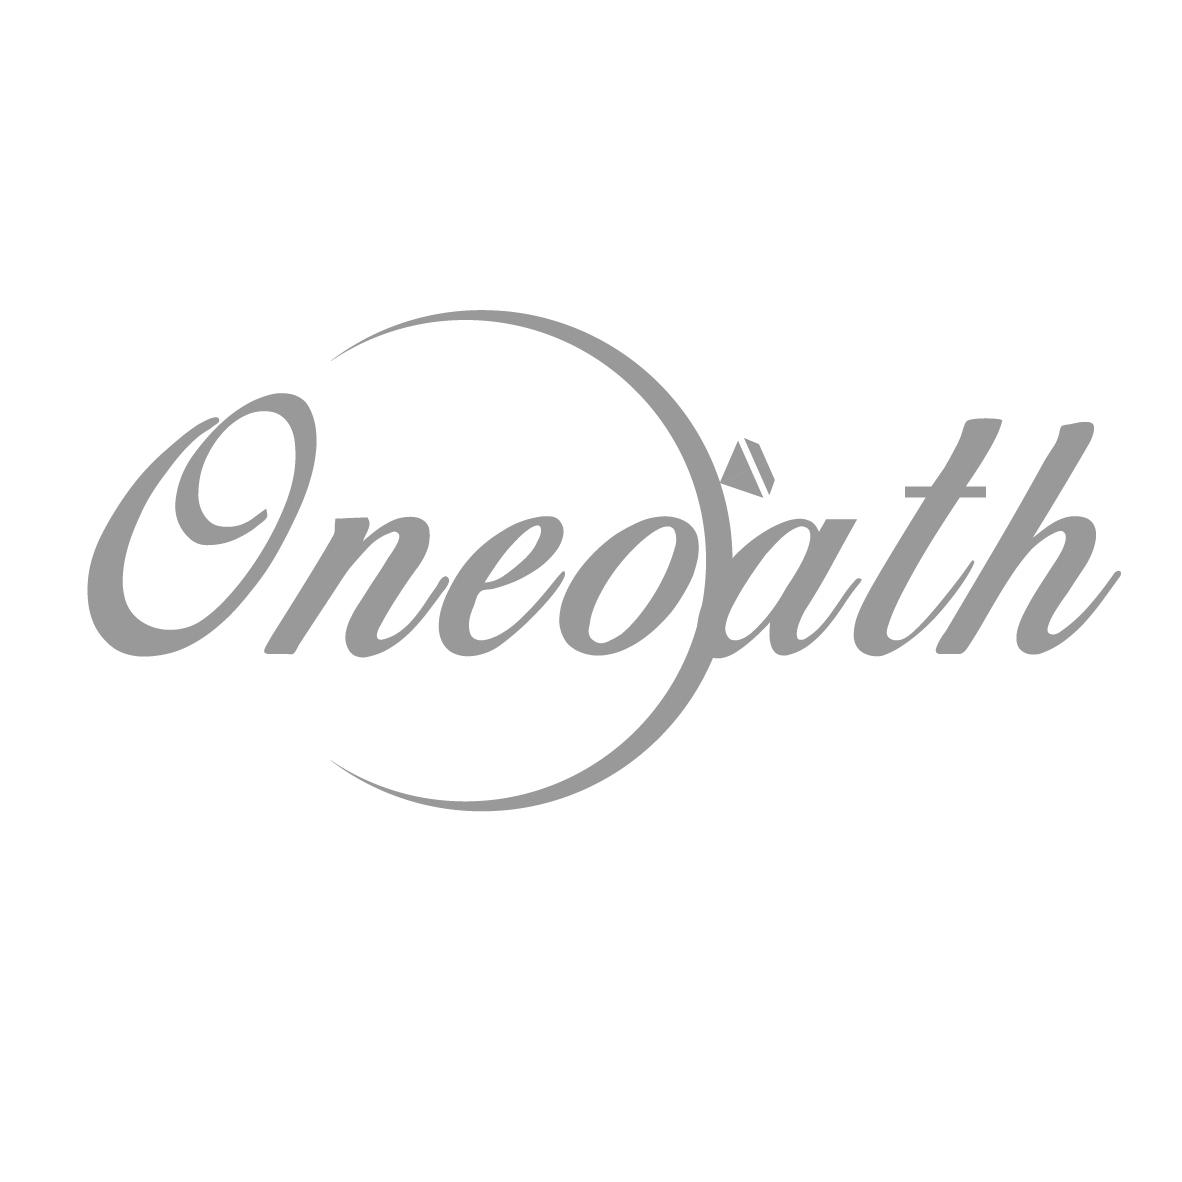 ONEOATH